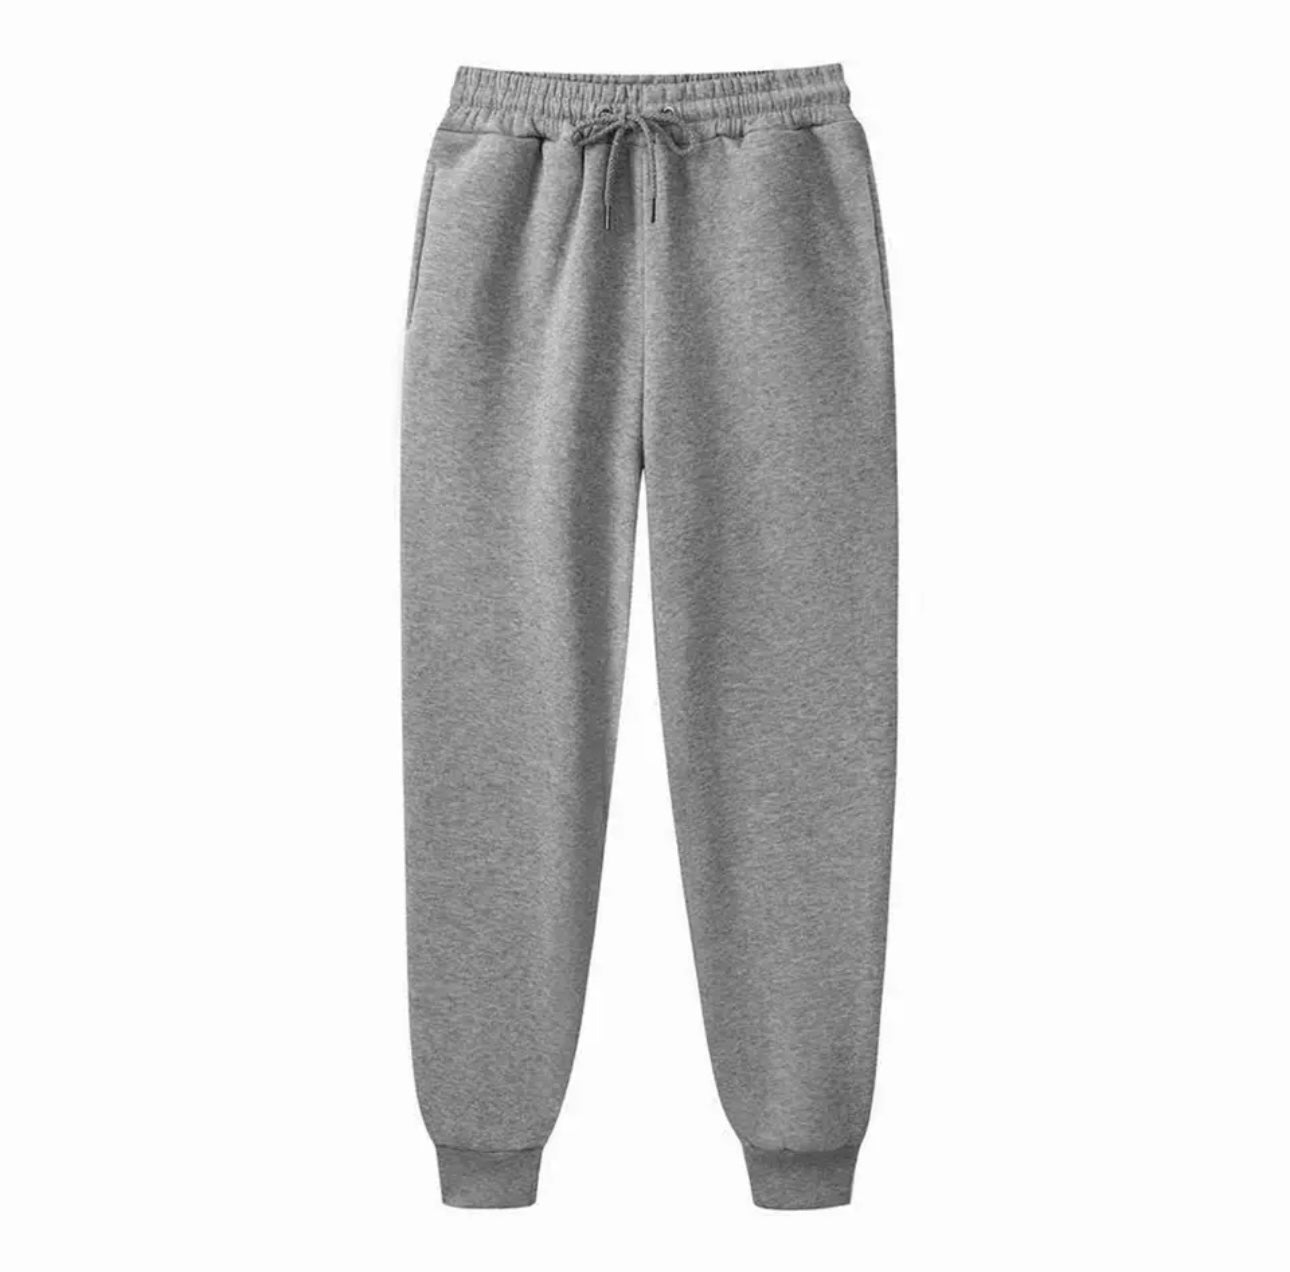 Grey Sweatpants – The General Philosophy